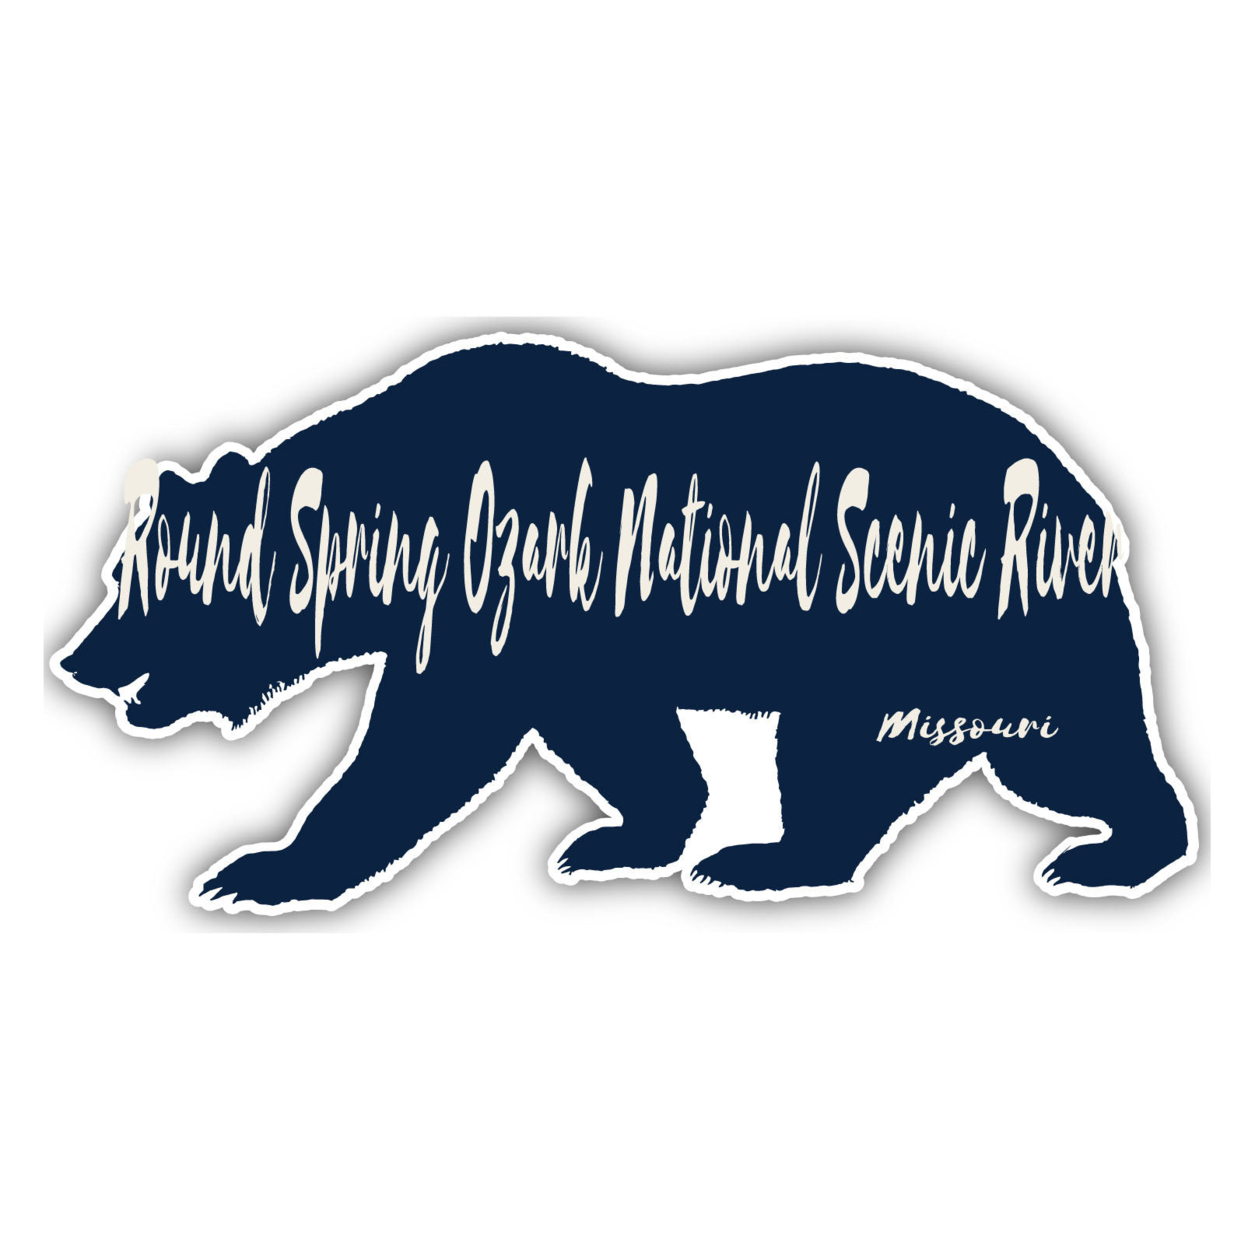 Round Spring Ozark National Scenic River Missouri Souvenir Decorative Stickers (Choose Theme And Size) - Single Unit, 2-Inch, Bear